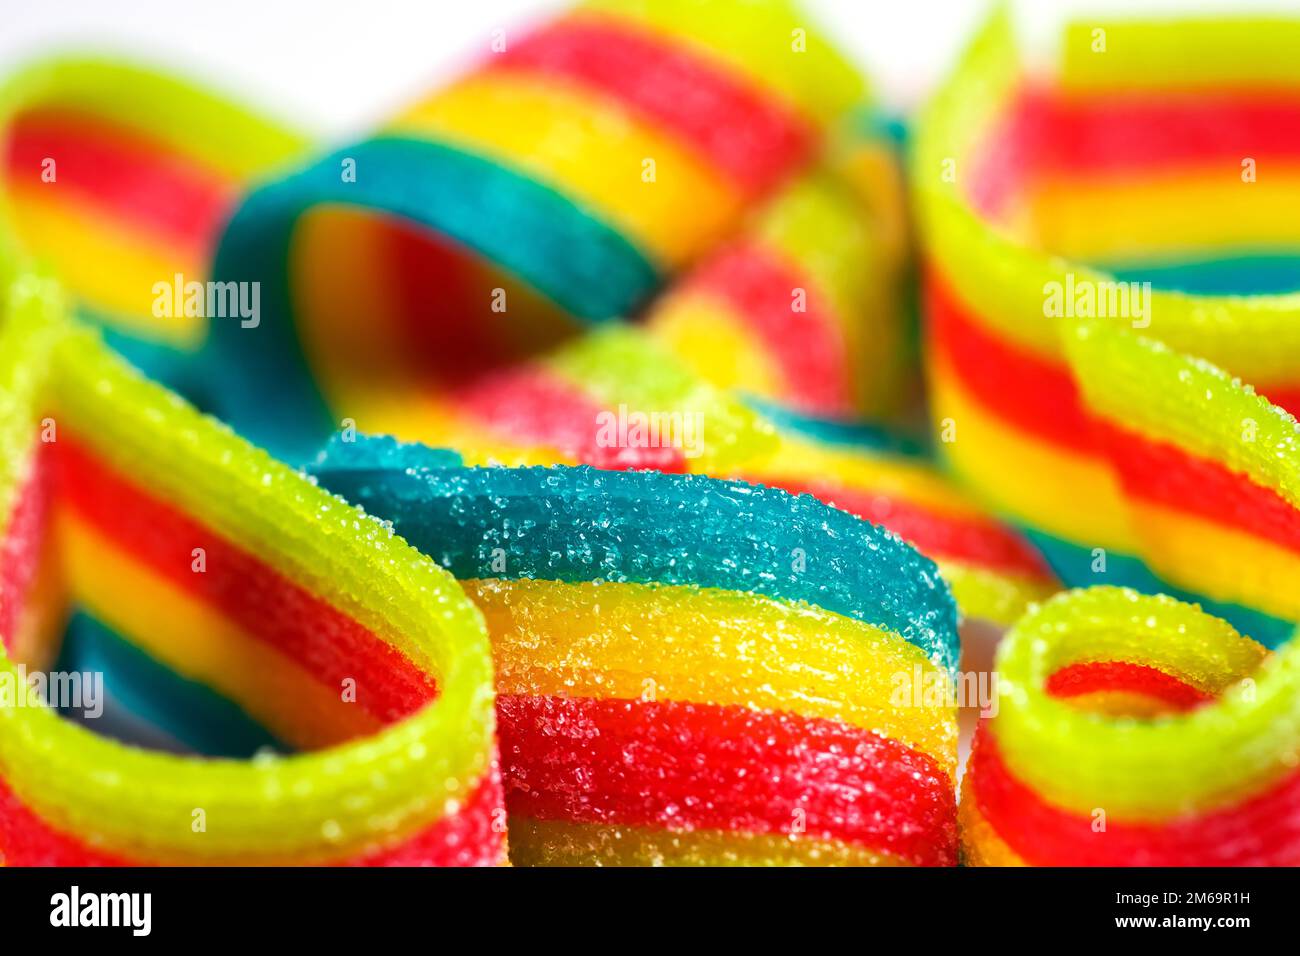 Caramelle arcobaleno di gelatina acidata strisce in zucchero